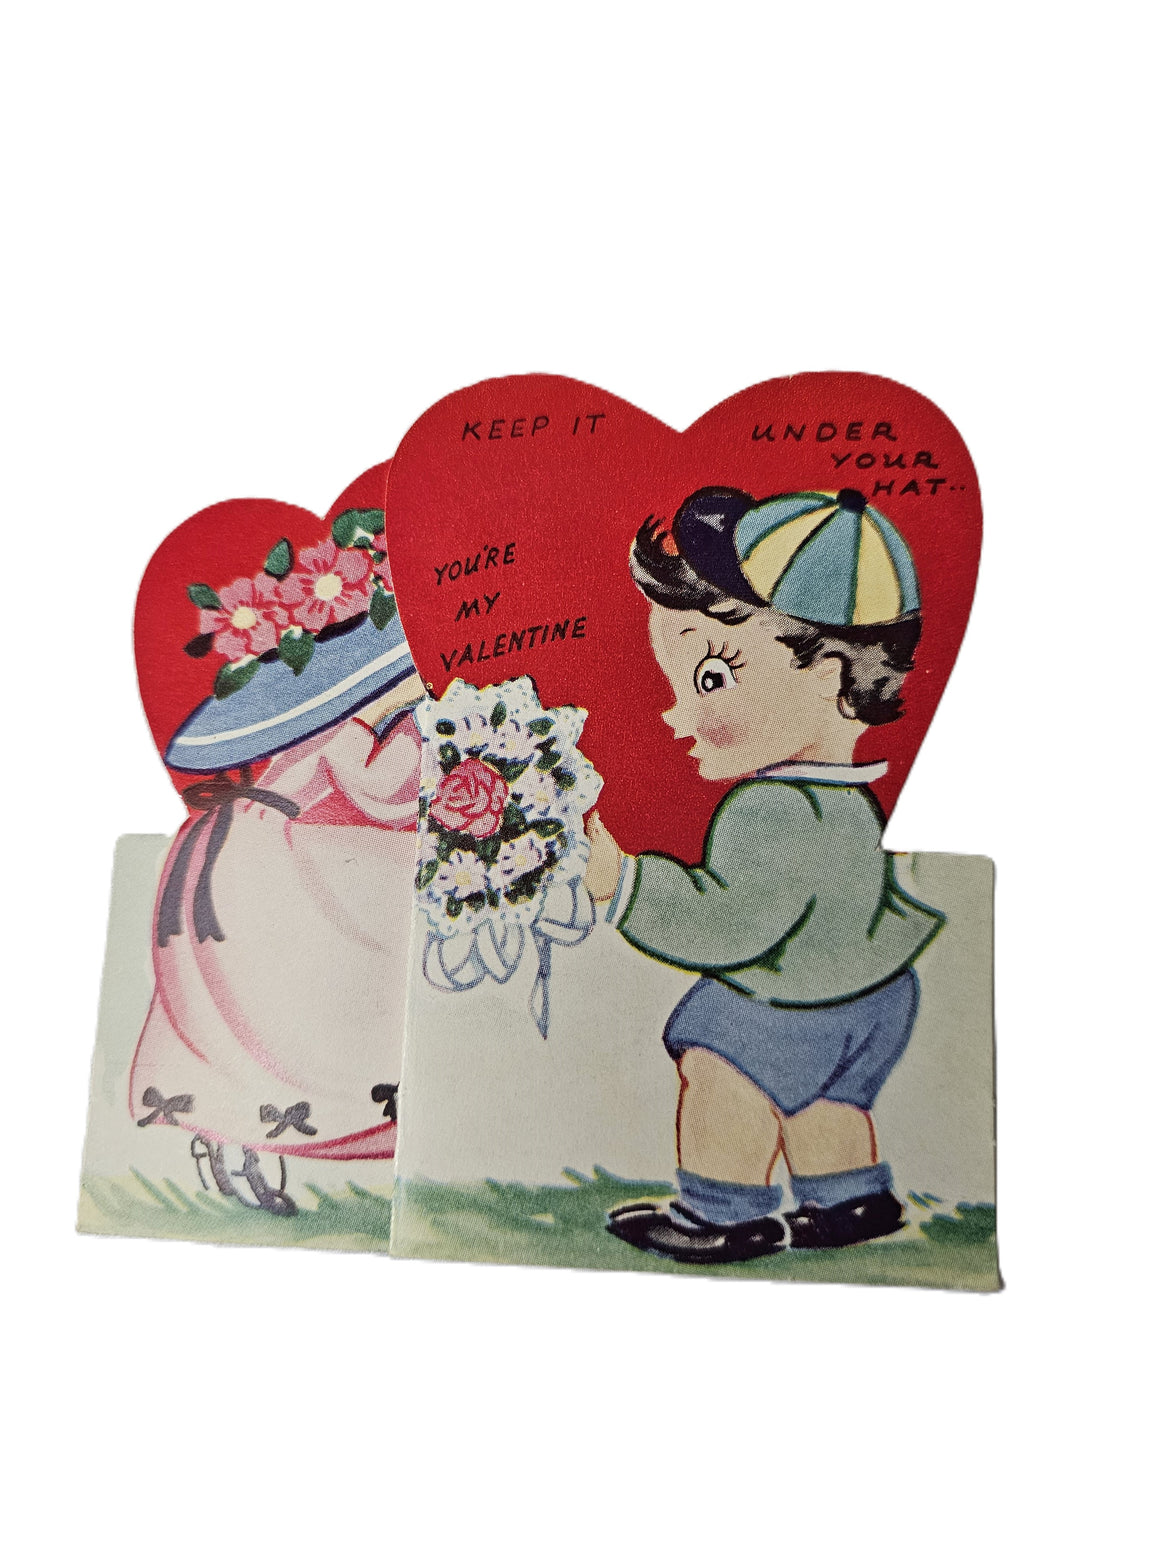 Vintage Die Cut Valentine Card Little Boy Giving Flowers to Surprised Little Girl